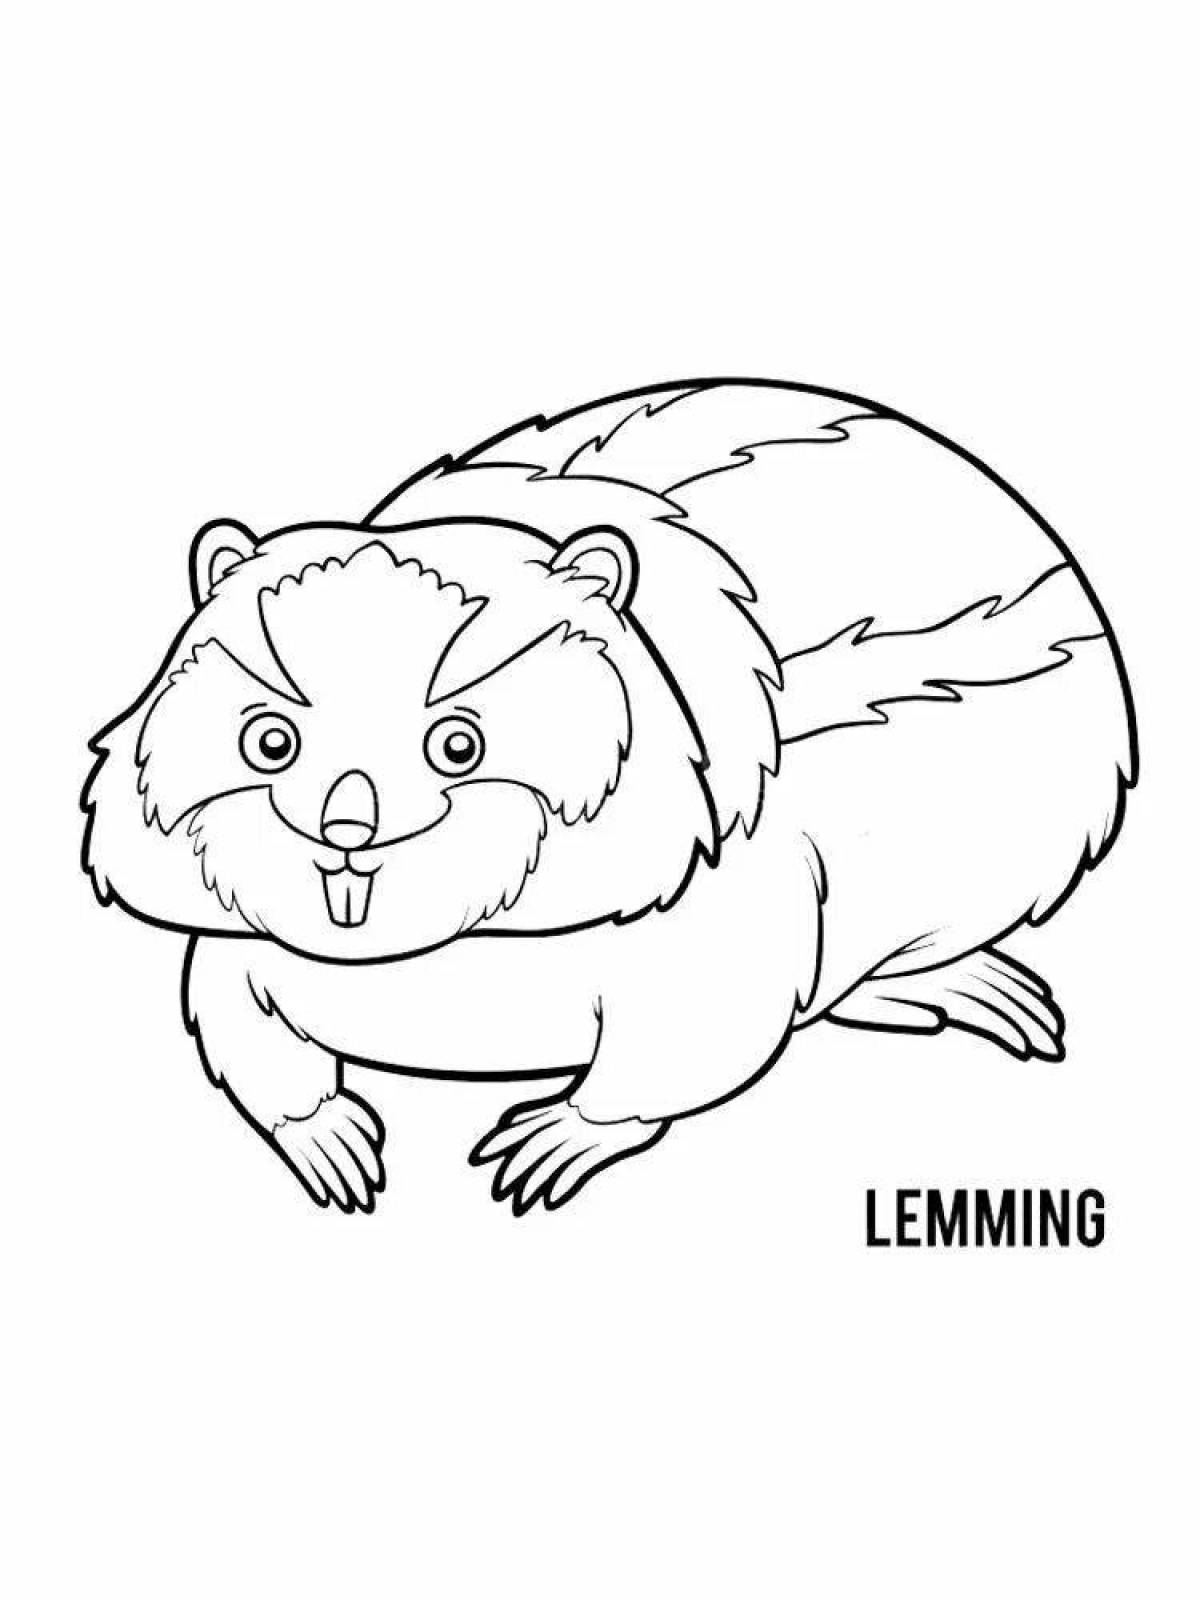 Coloring live lemmings